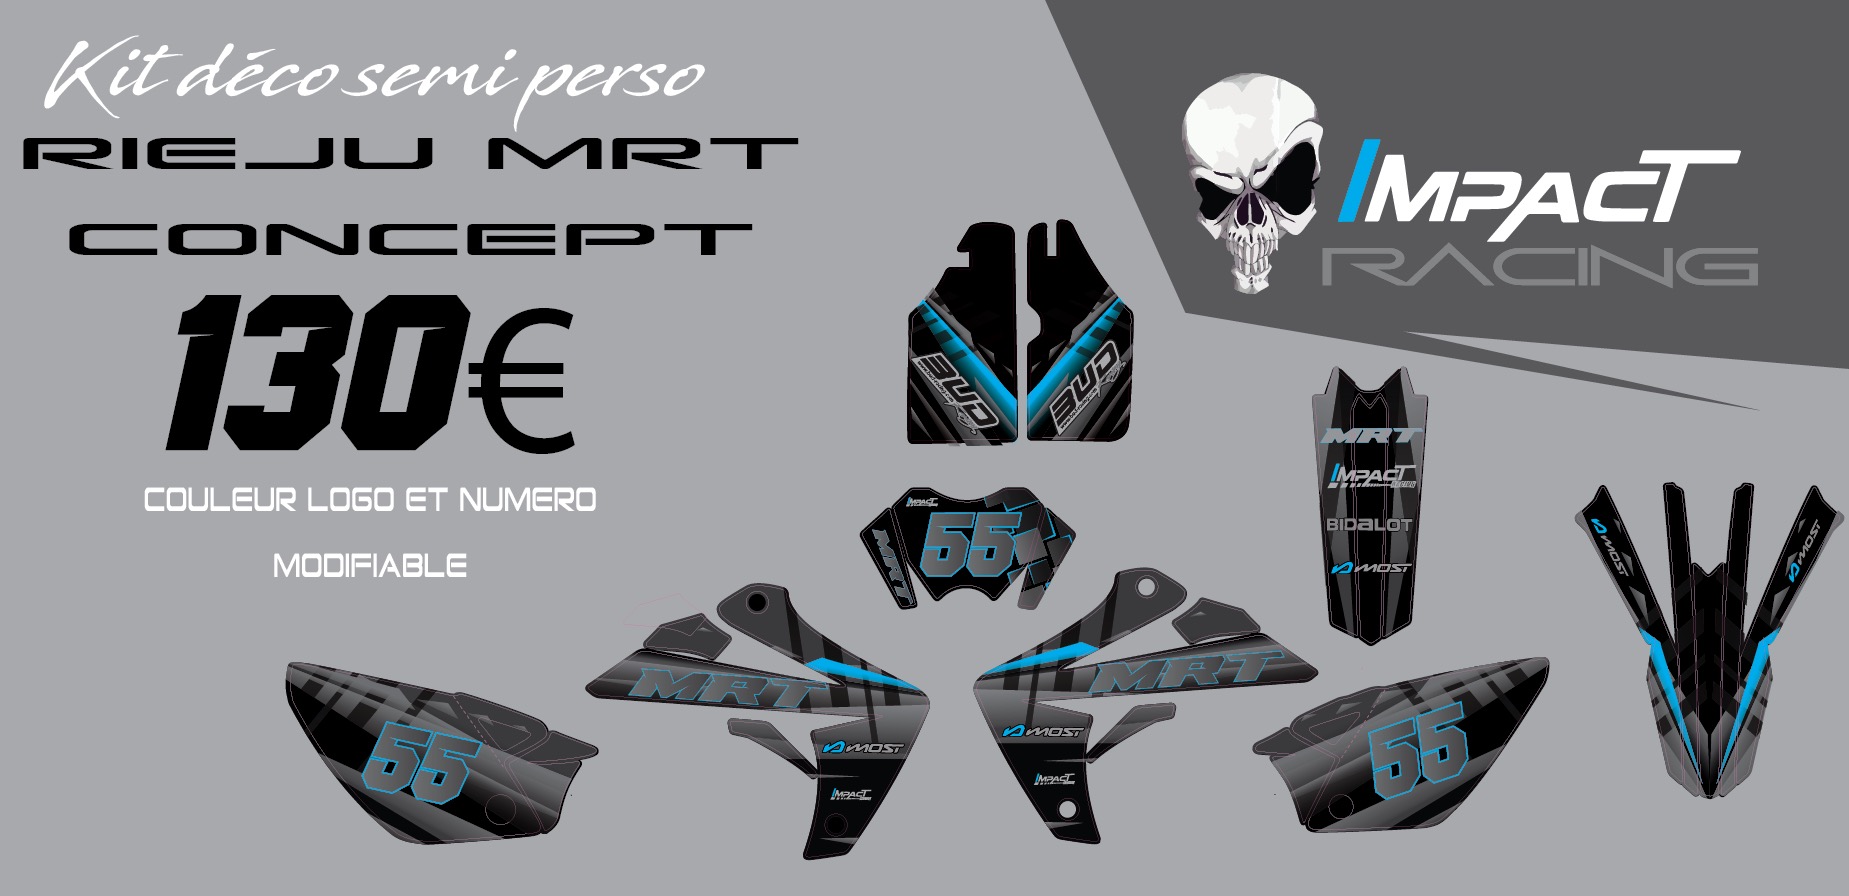 Kit Déco semi perso RIEJU MRT 50cc blue 80 – Impact Racing Design